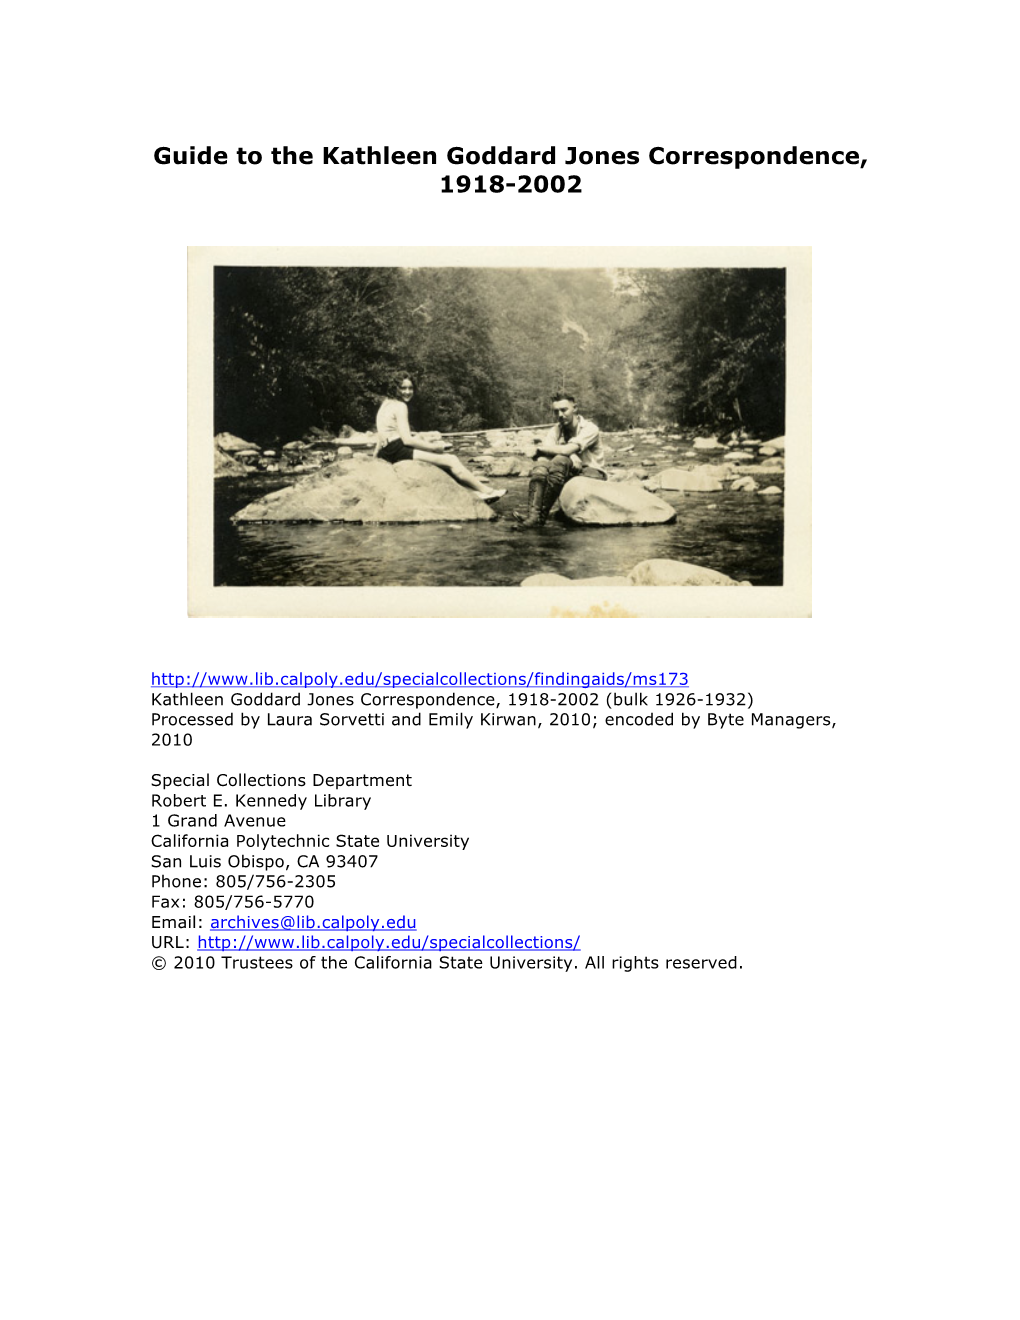 Guide to the Kathleen Goddard Jones Correspondence, 1918-2002